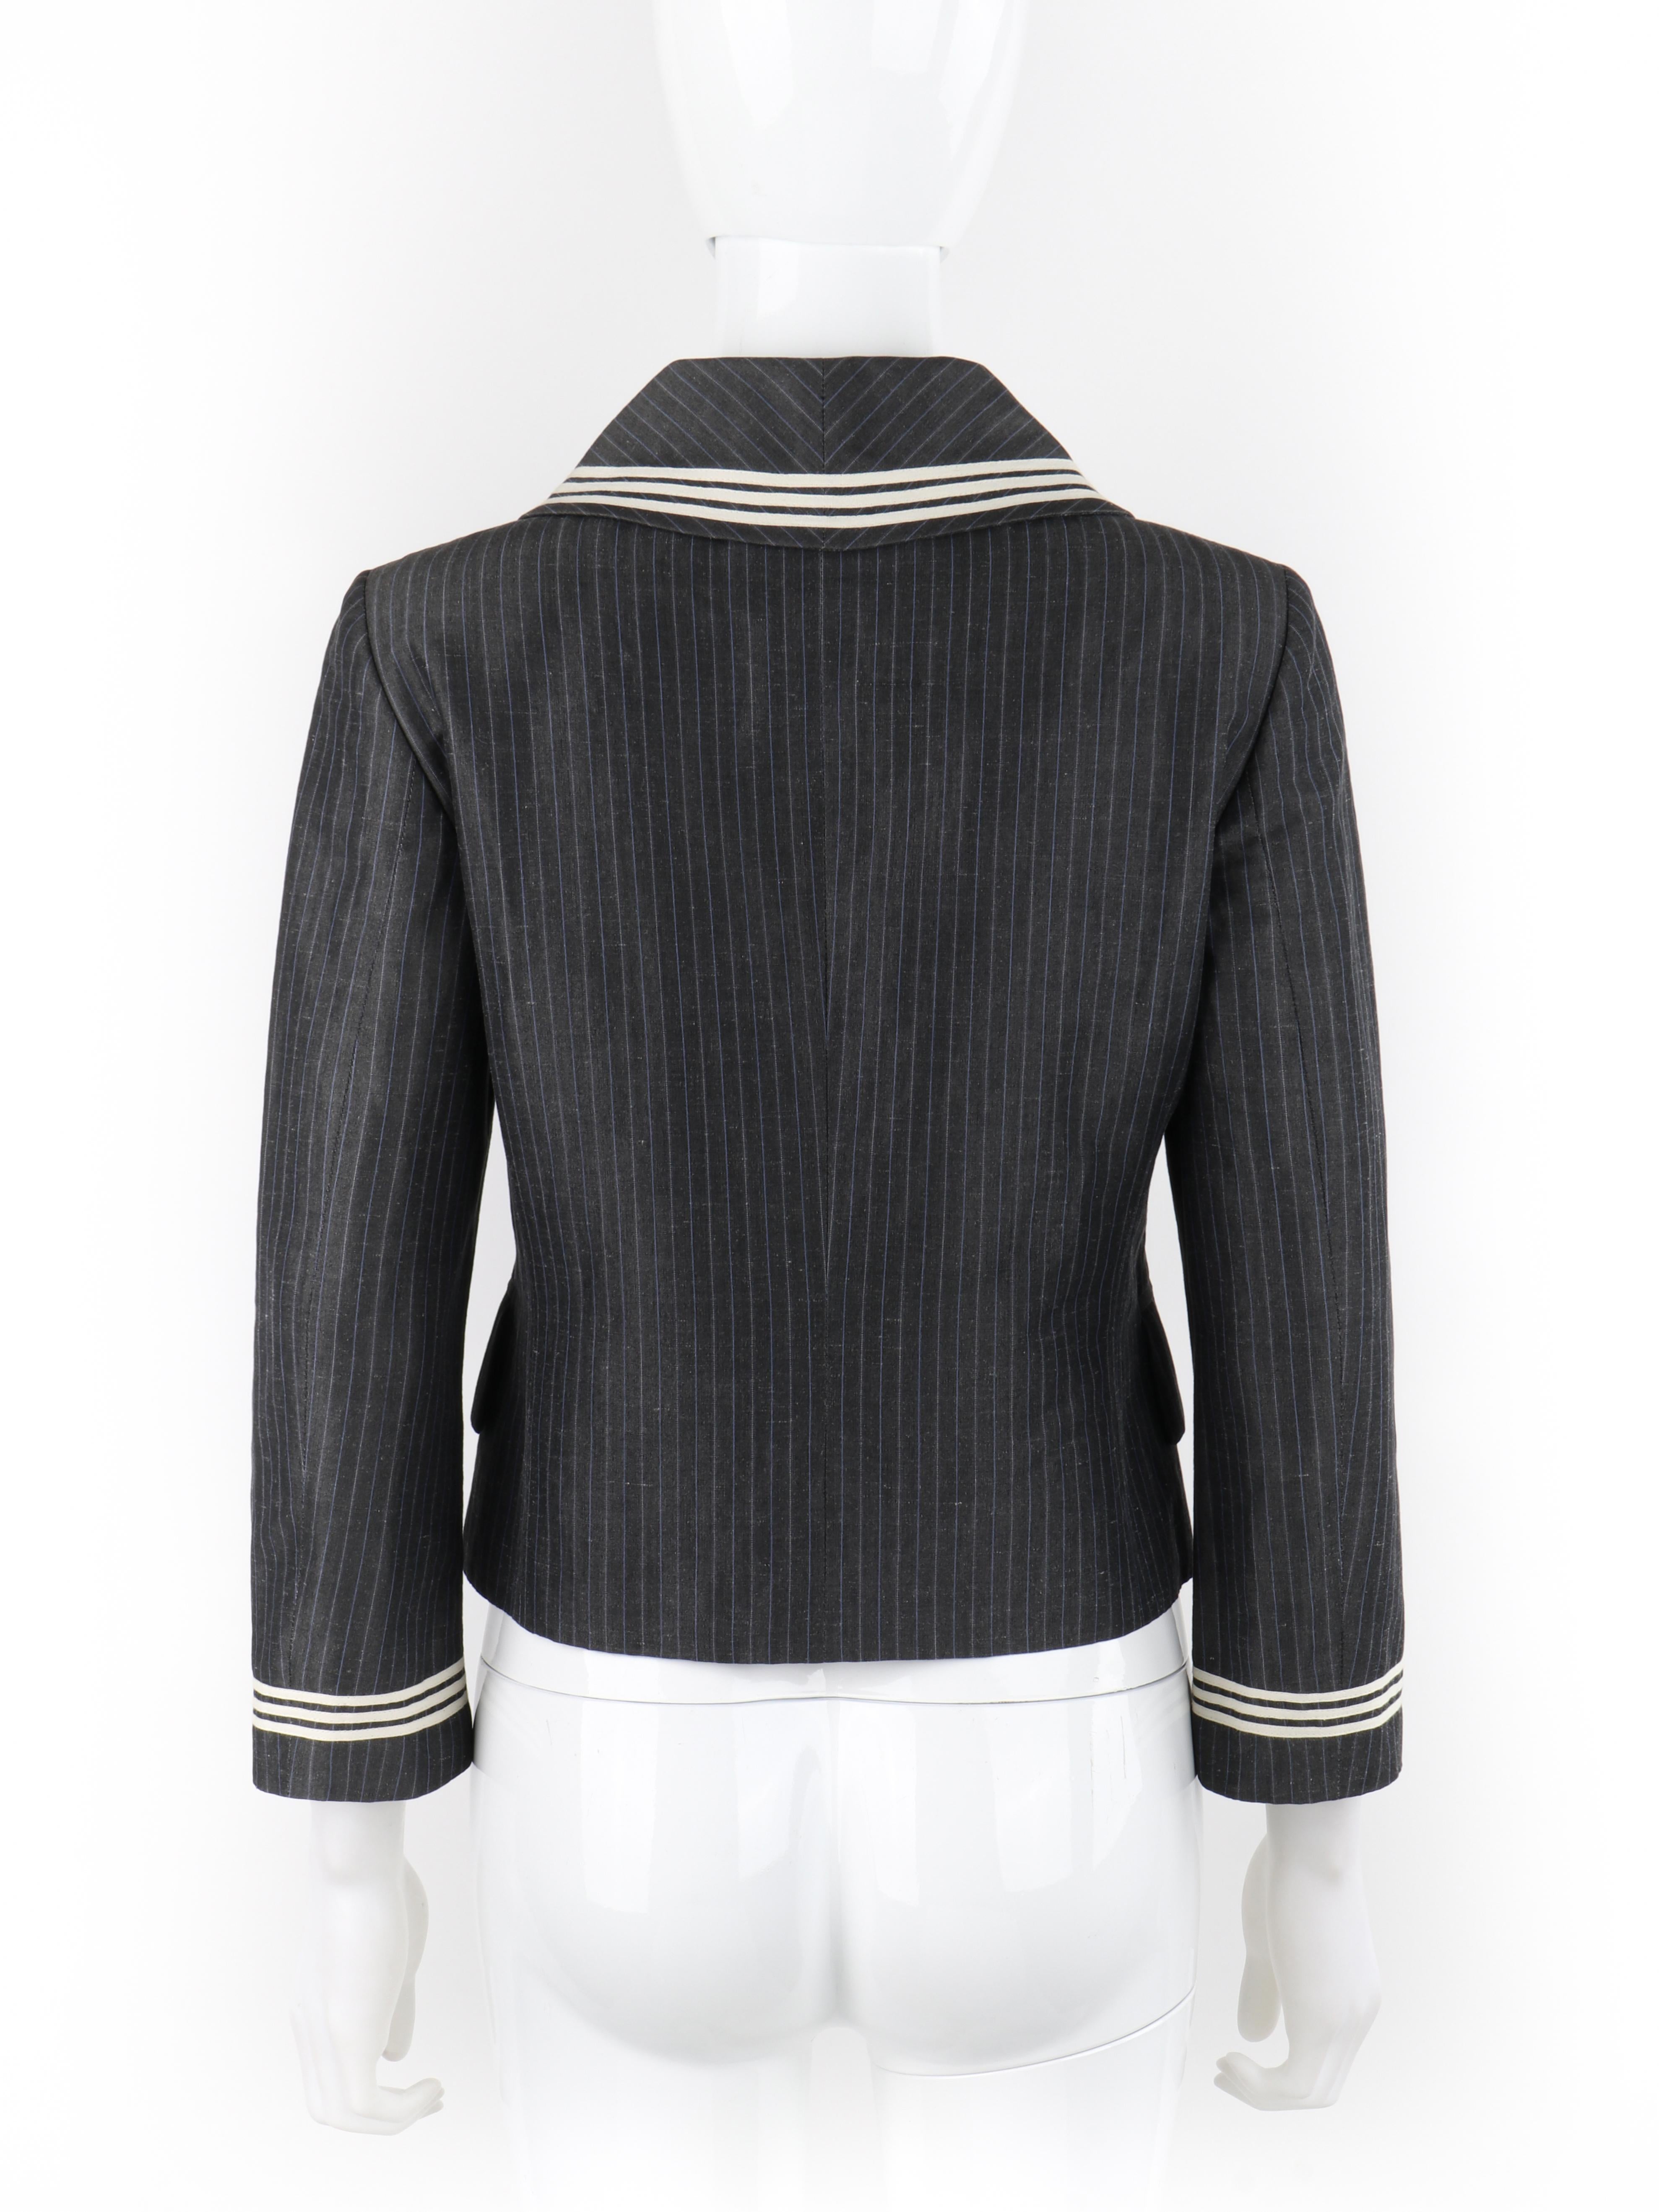 Women's ALEXANDER McQUEEN S/S 2005 Grey Pinstripe Sailor Blazer Jacket Shawl Collar  For Sale